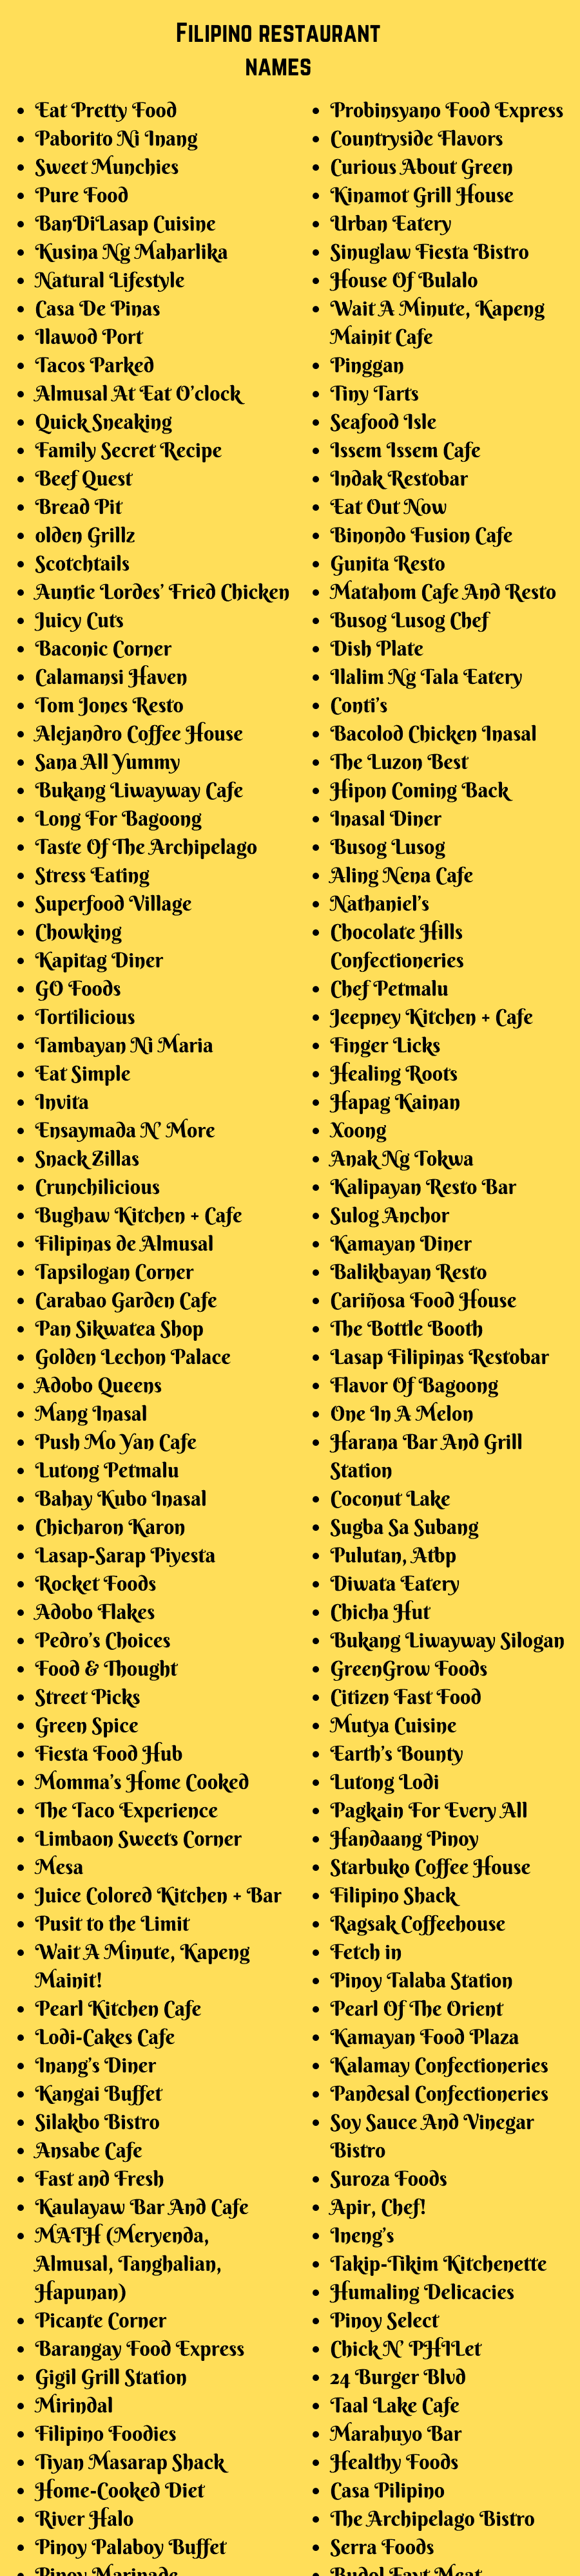 400 Creative Filipino Restaurant Names